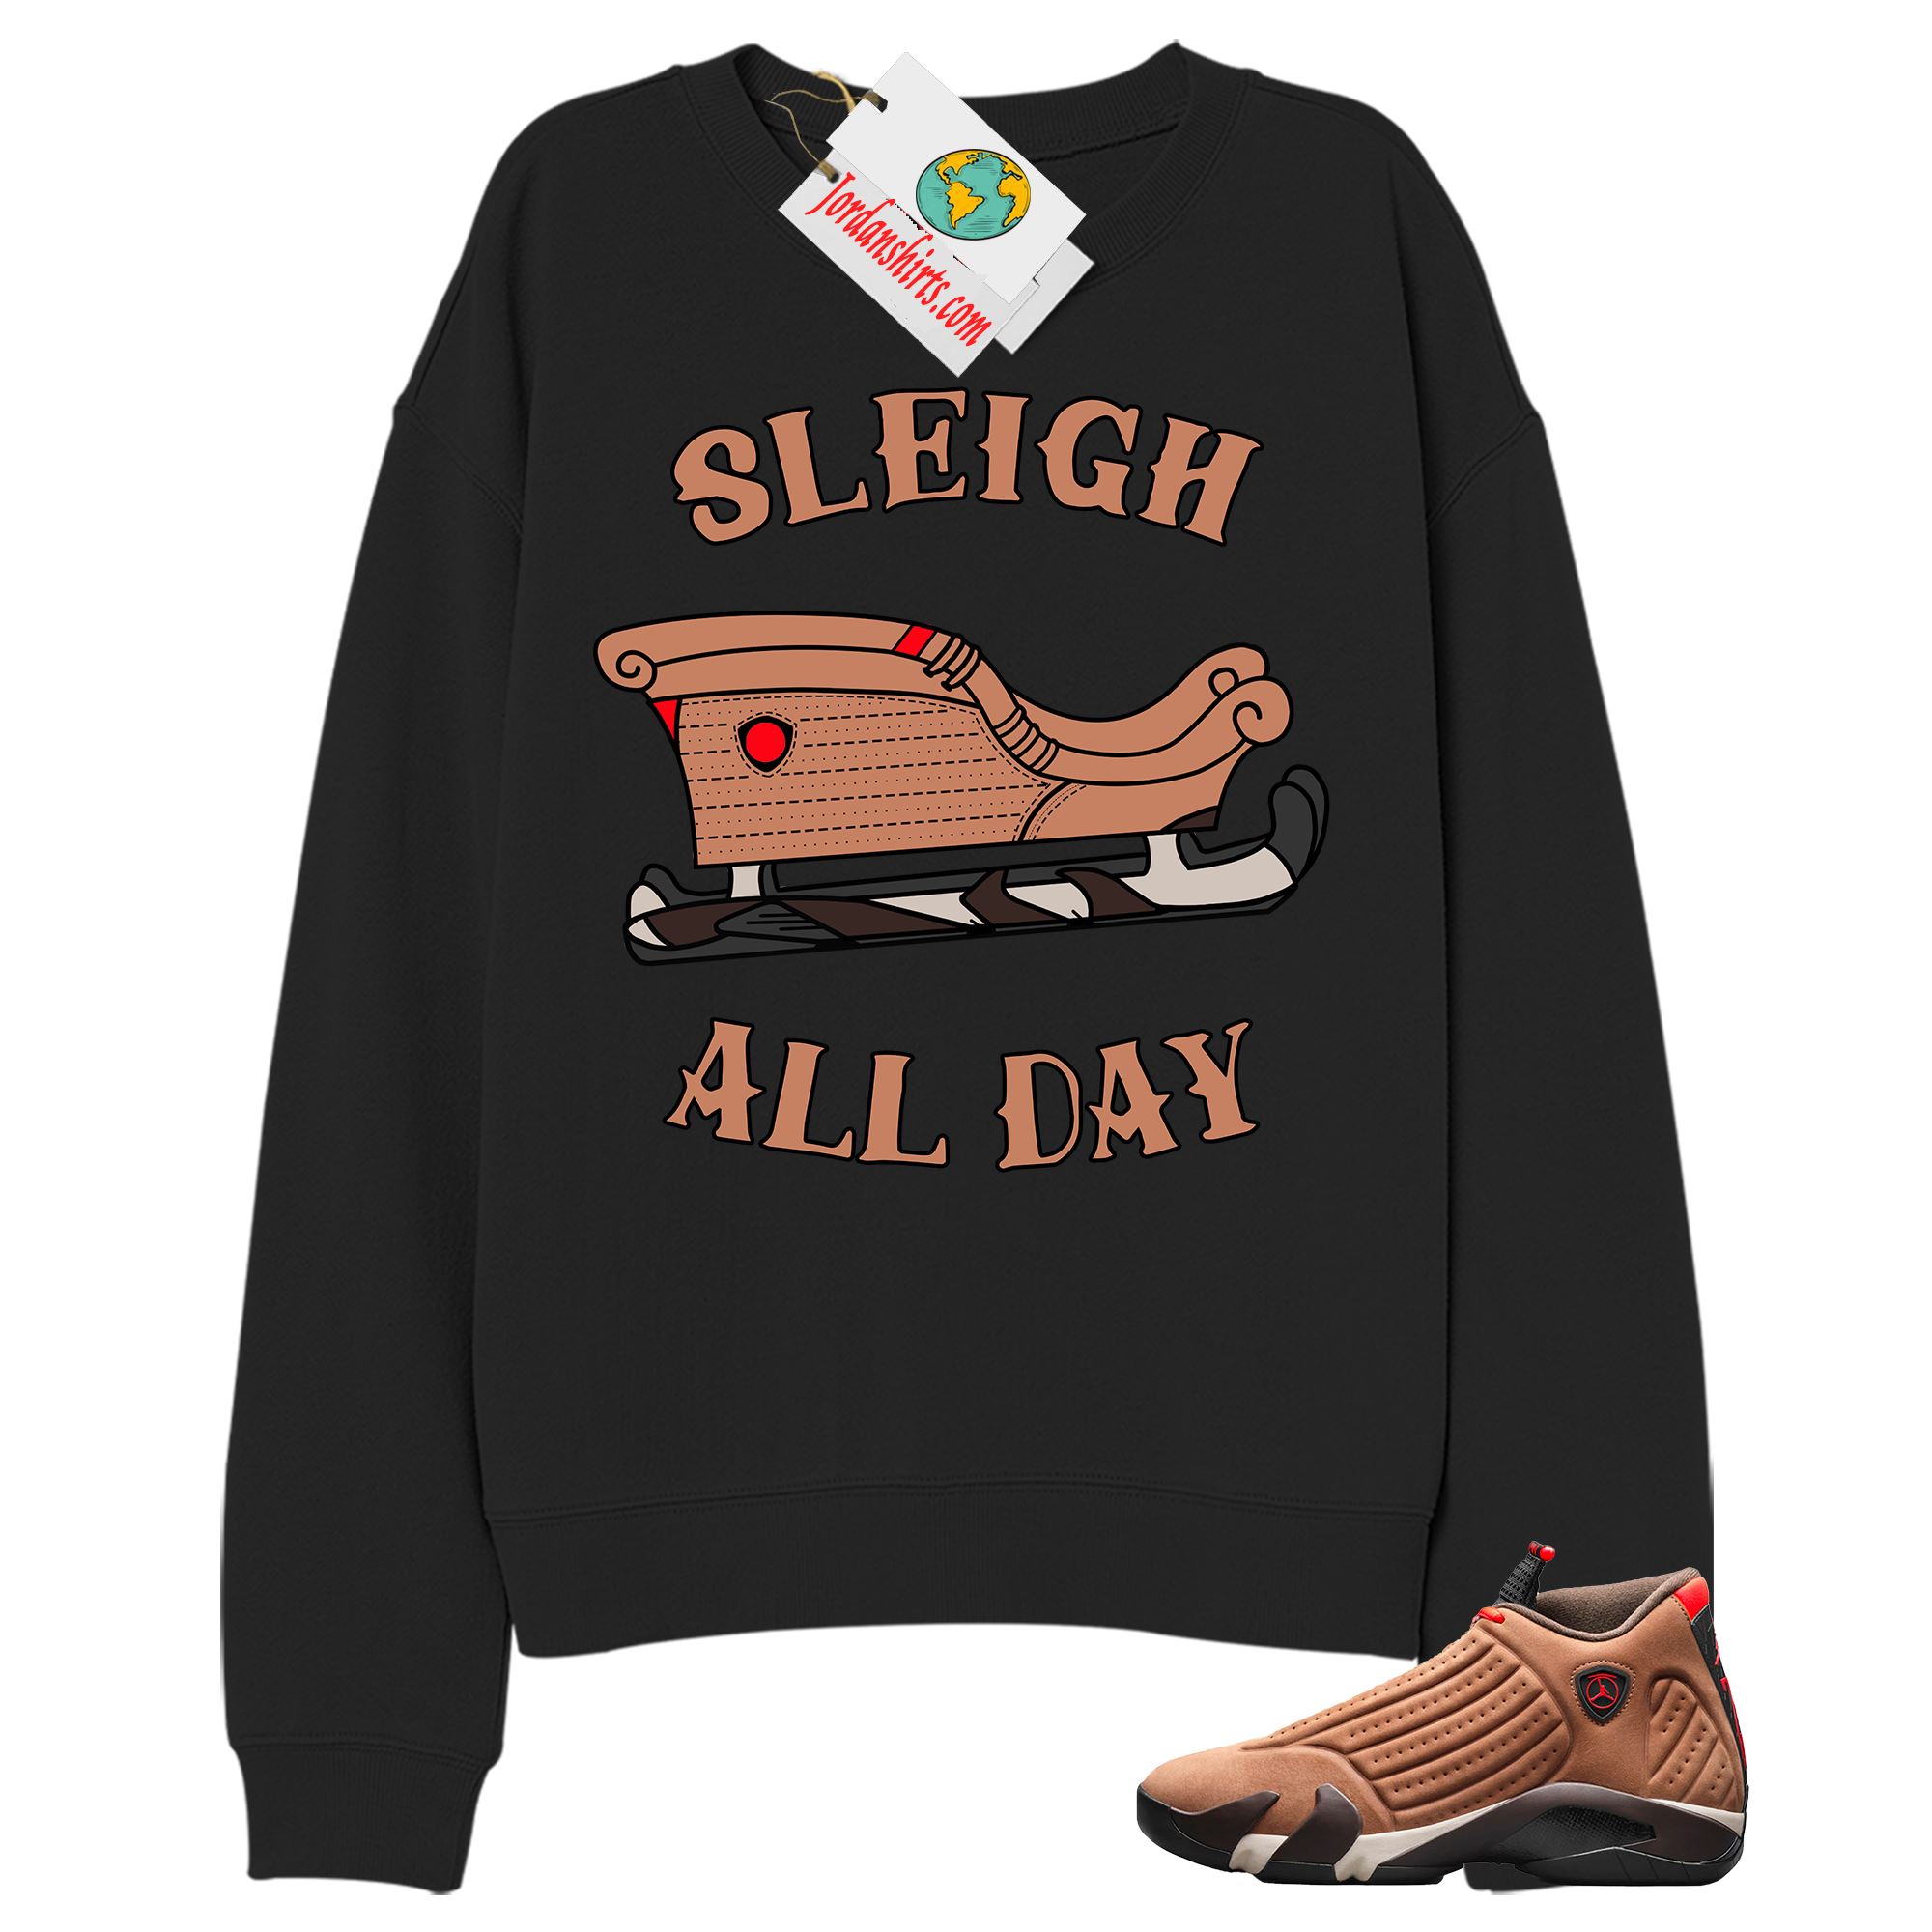 Jordan 14 Sweatshirt, Sneaker Sleigh Black Sweatshirt Air Jordan 14 Winterized 14s Full Size Up To 5xl